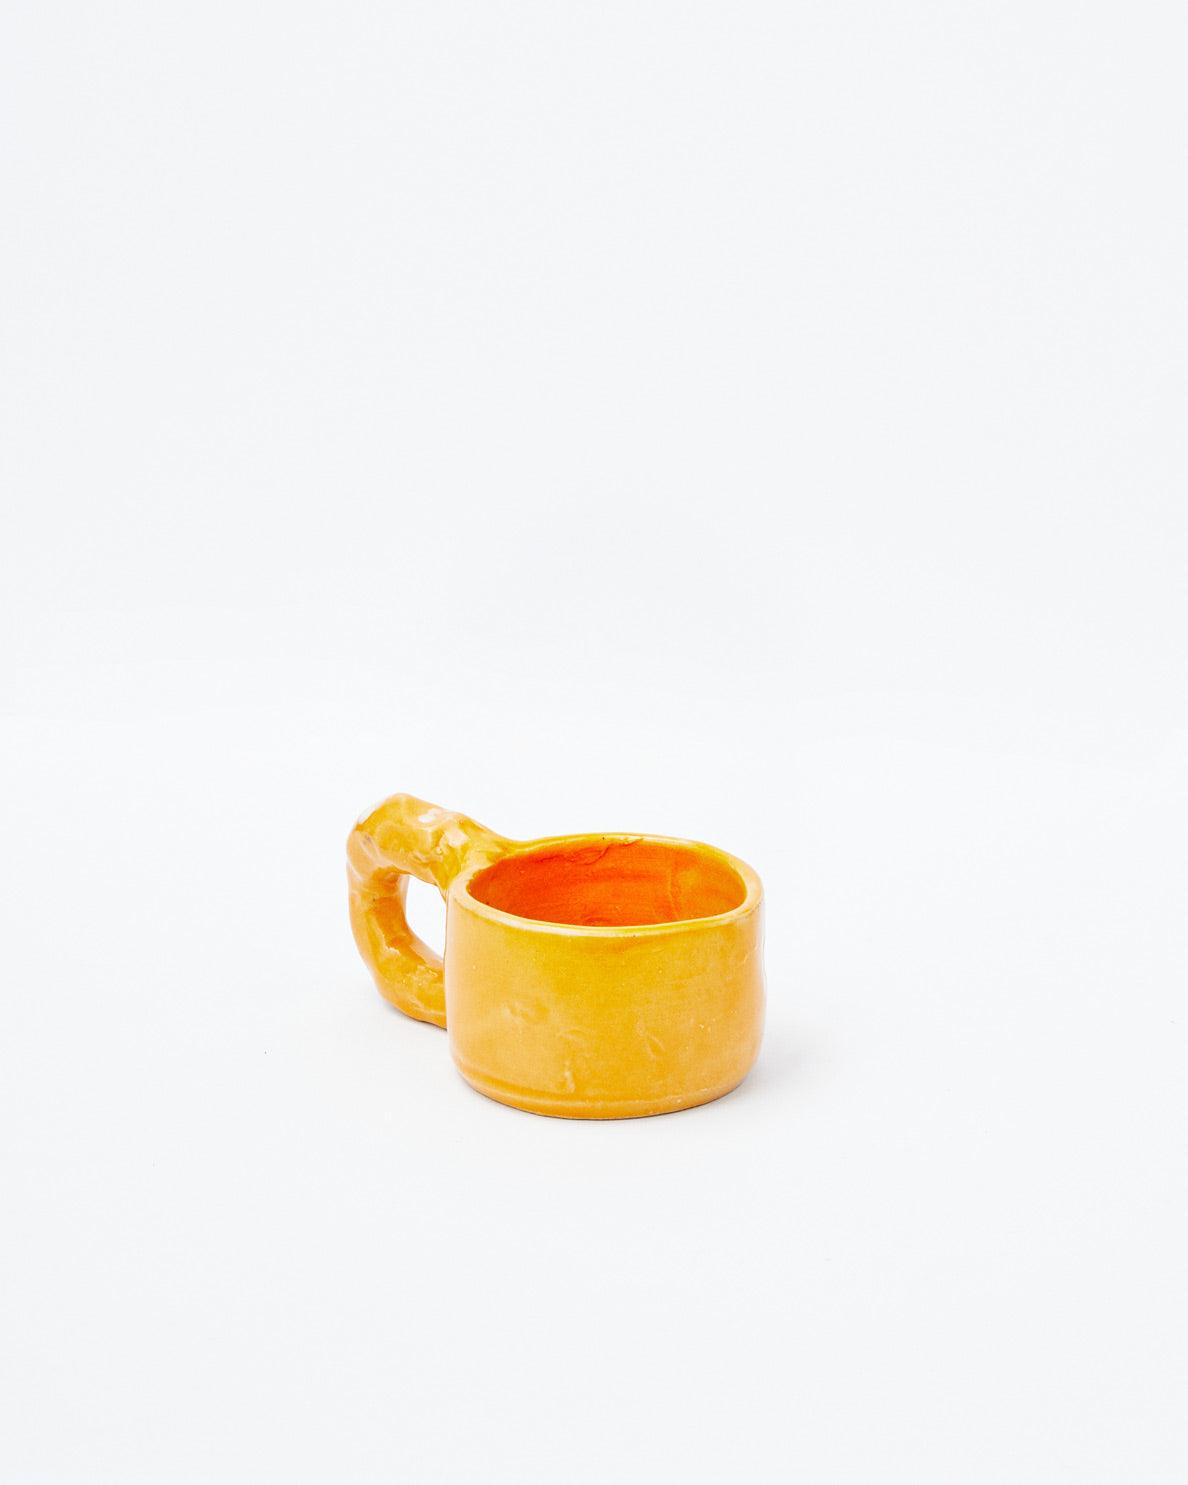 White background, orange modern ceramic cup with slanting handle